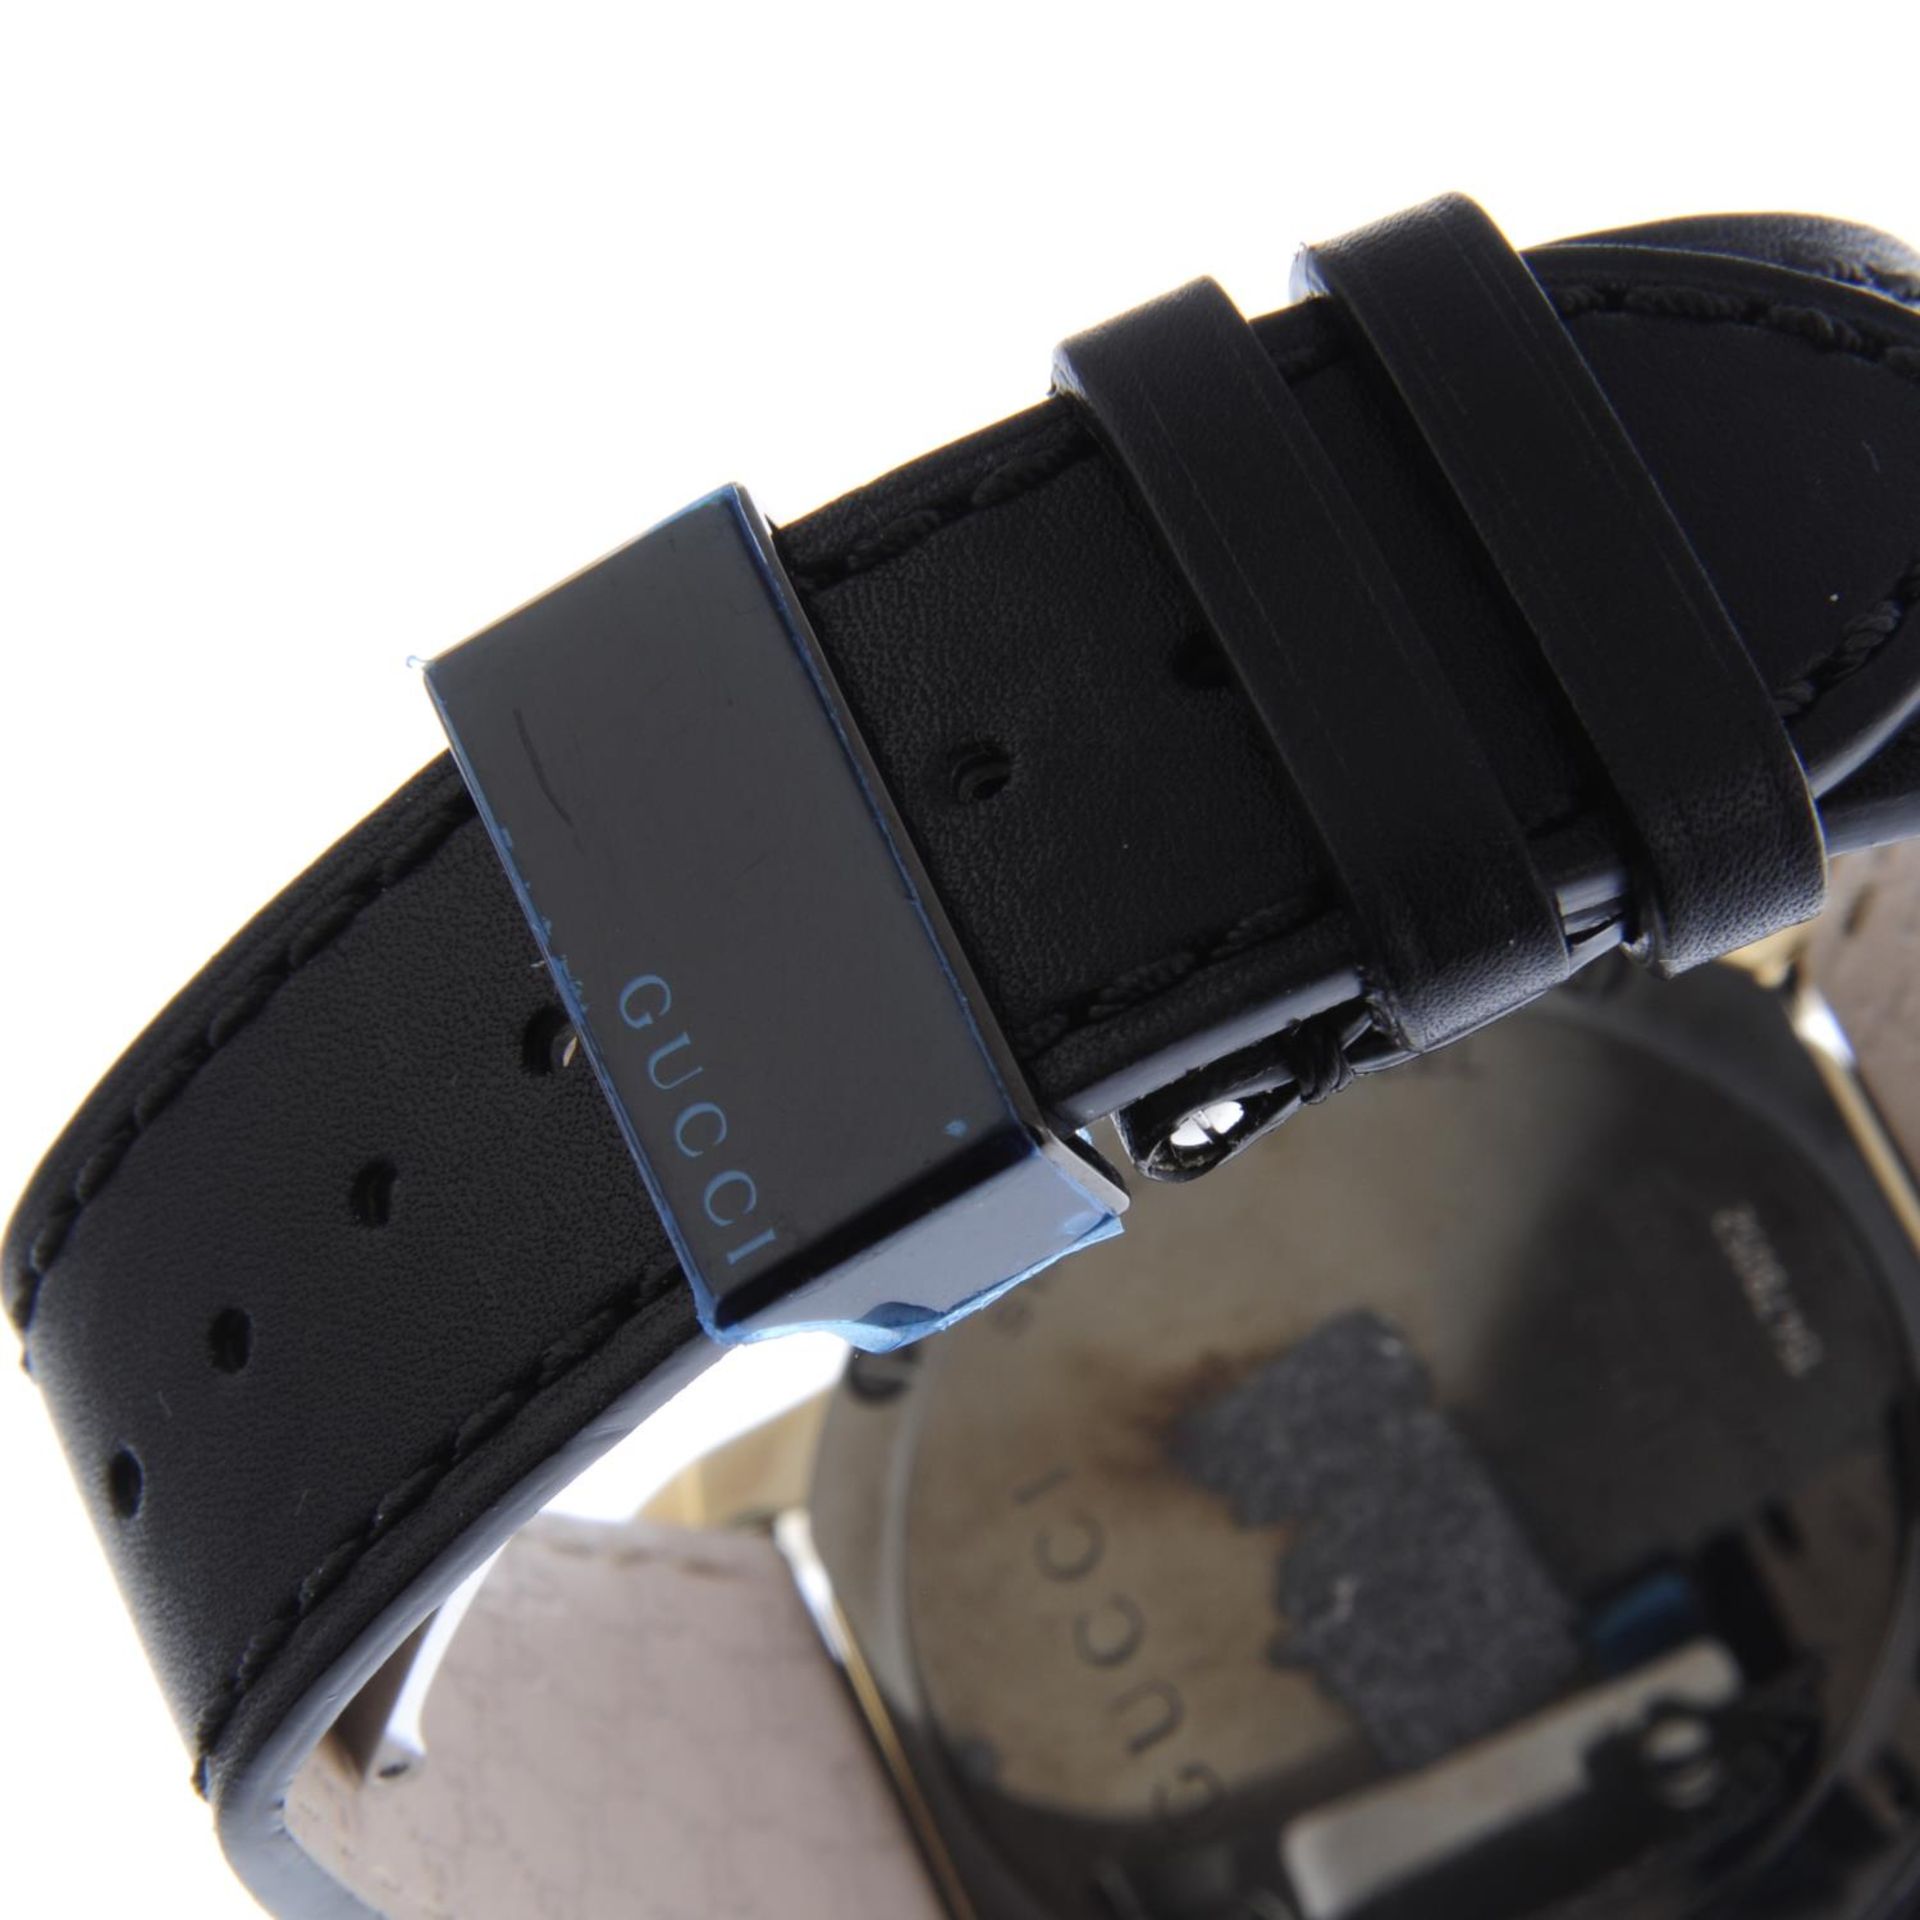 GUCCI - a gentleman's G-Chrono chronograph wrist watch. - Image 2 of 4